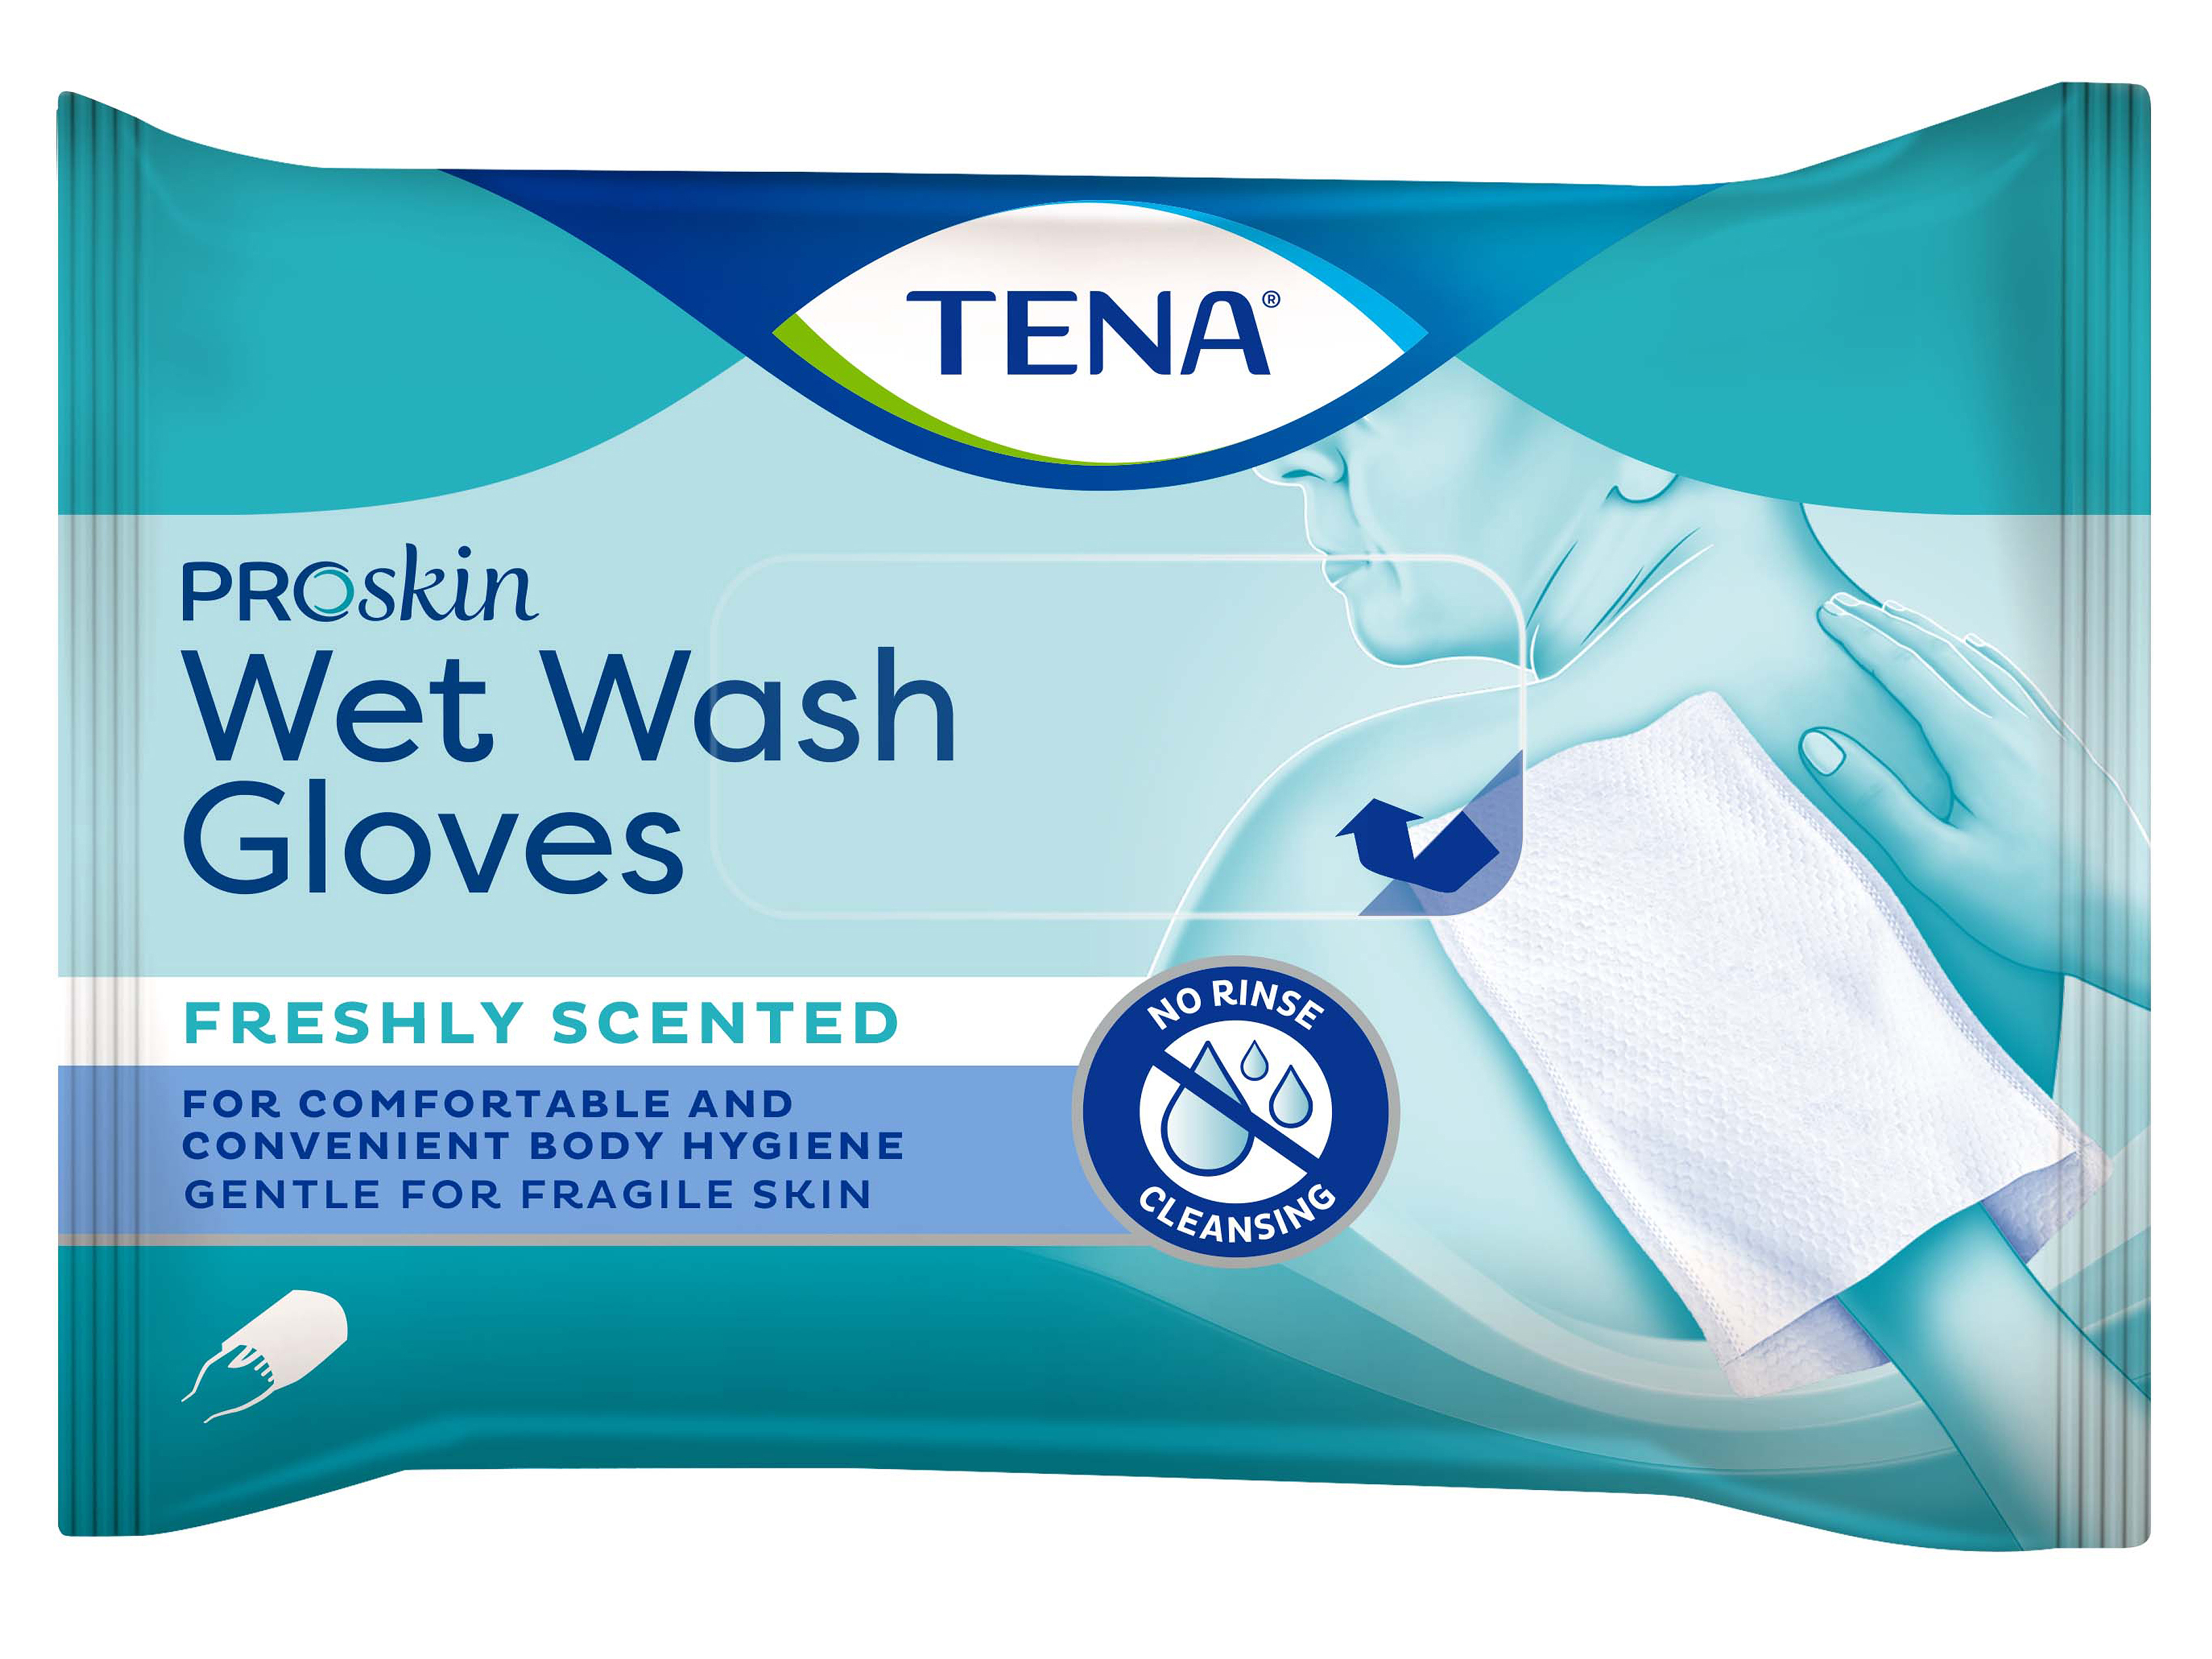 Tena Proskin Wet Wash Glove, 8 stk.